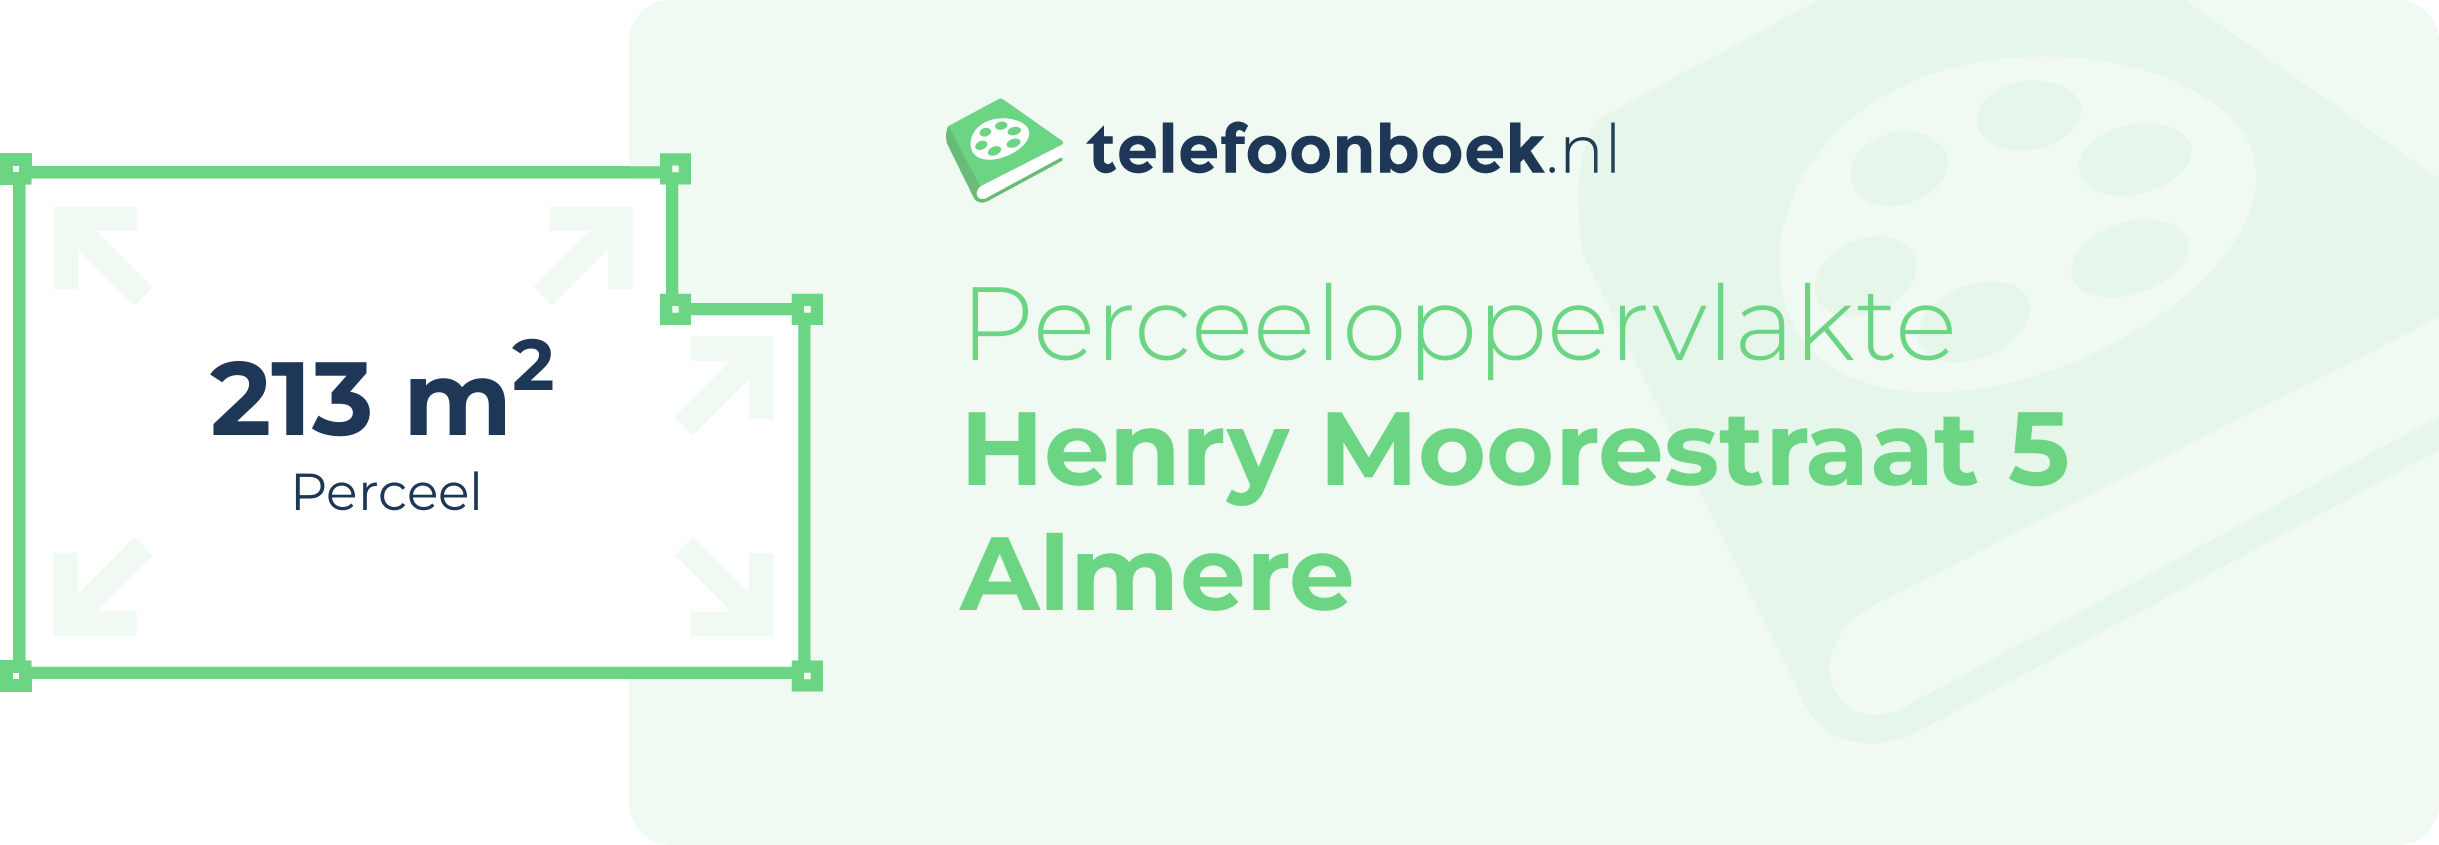 Perceeloppervlakte Henry Moorestraat 5 Almere